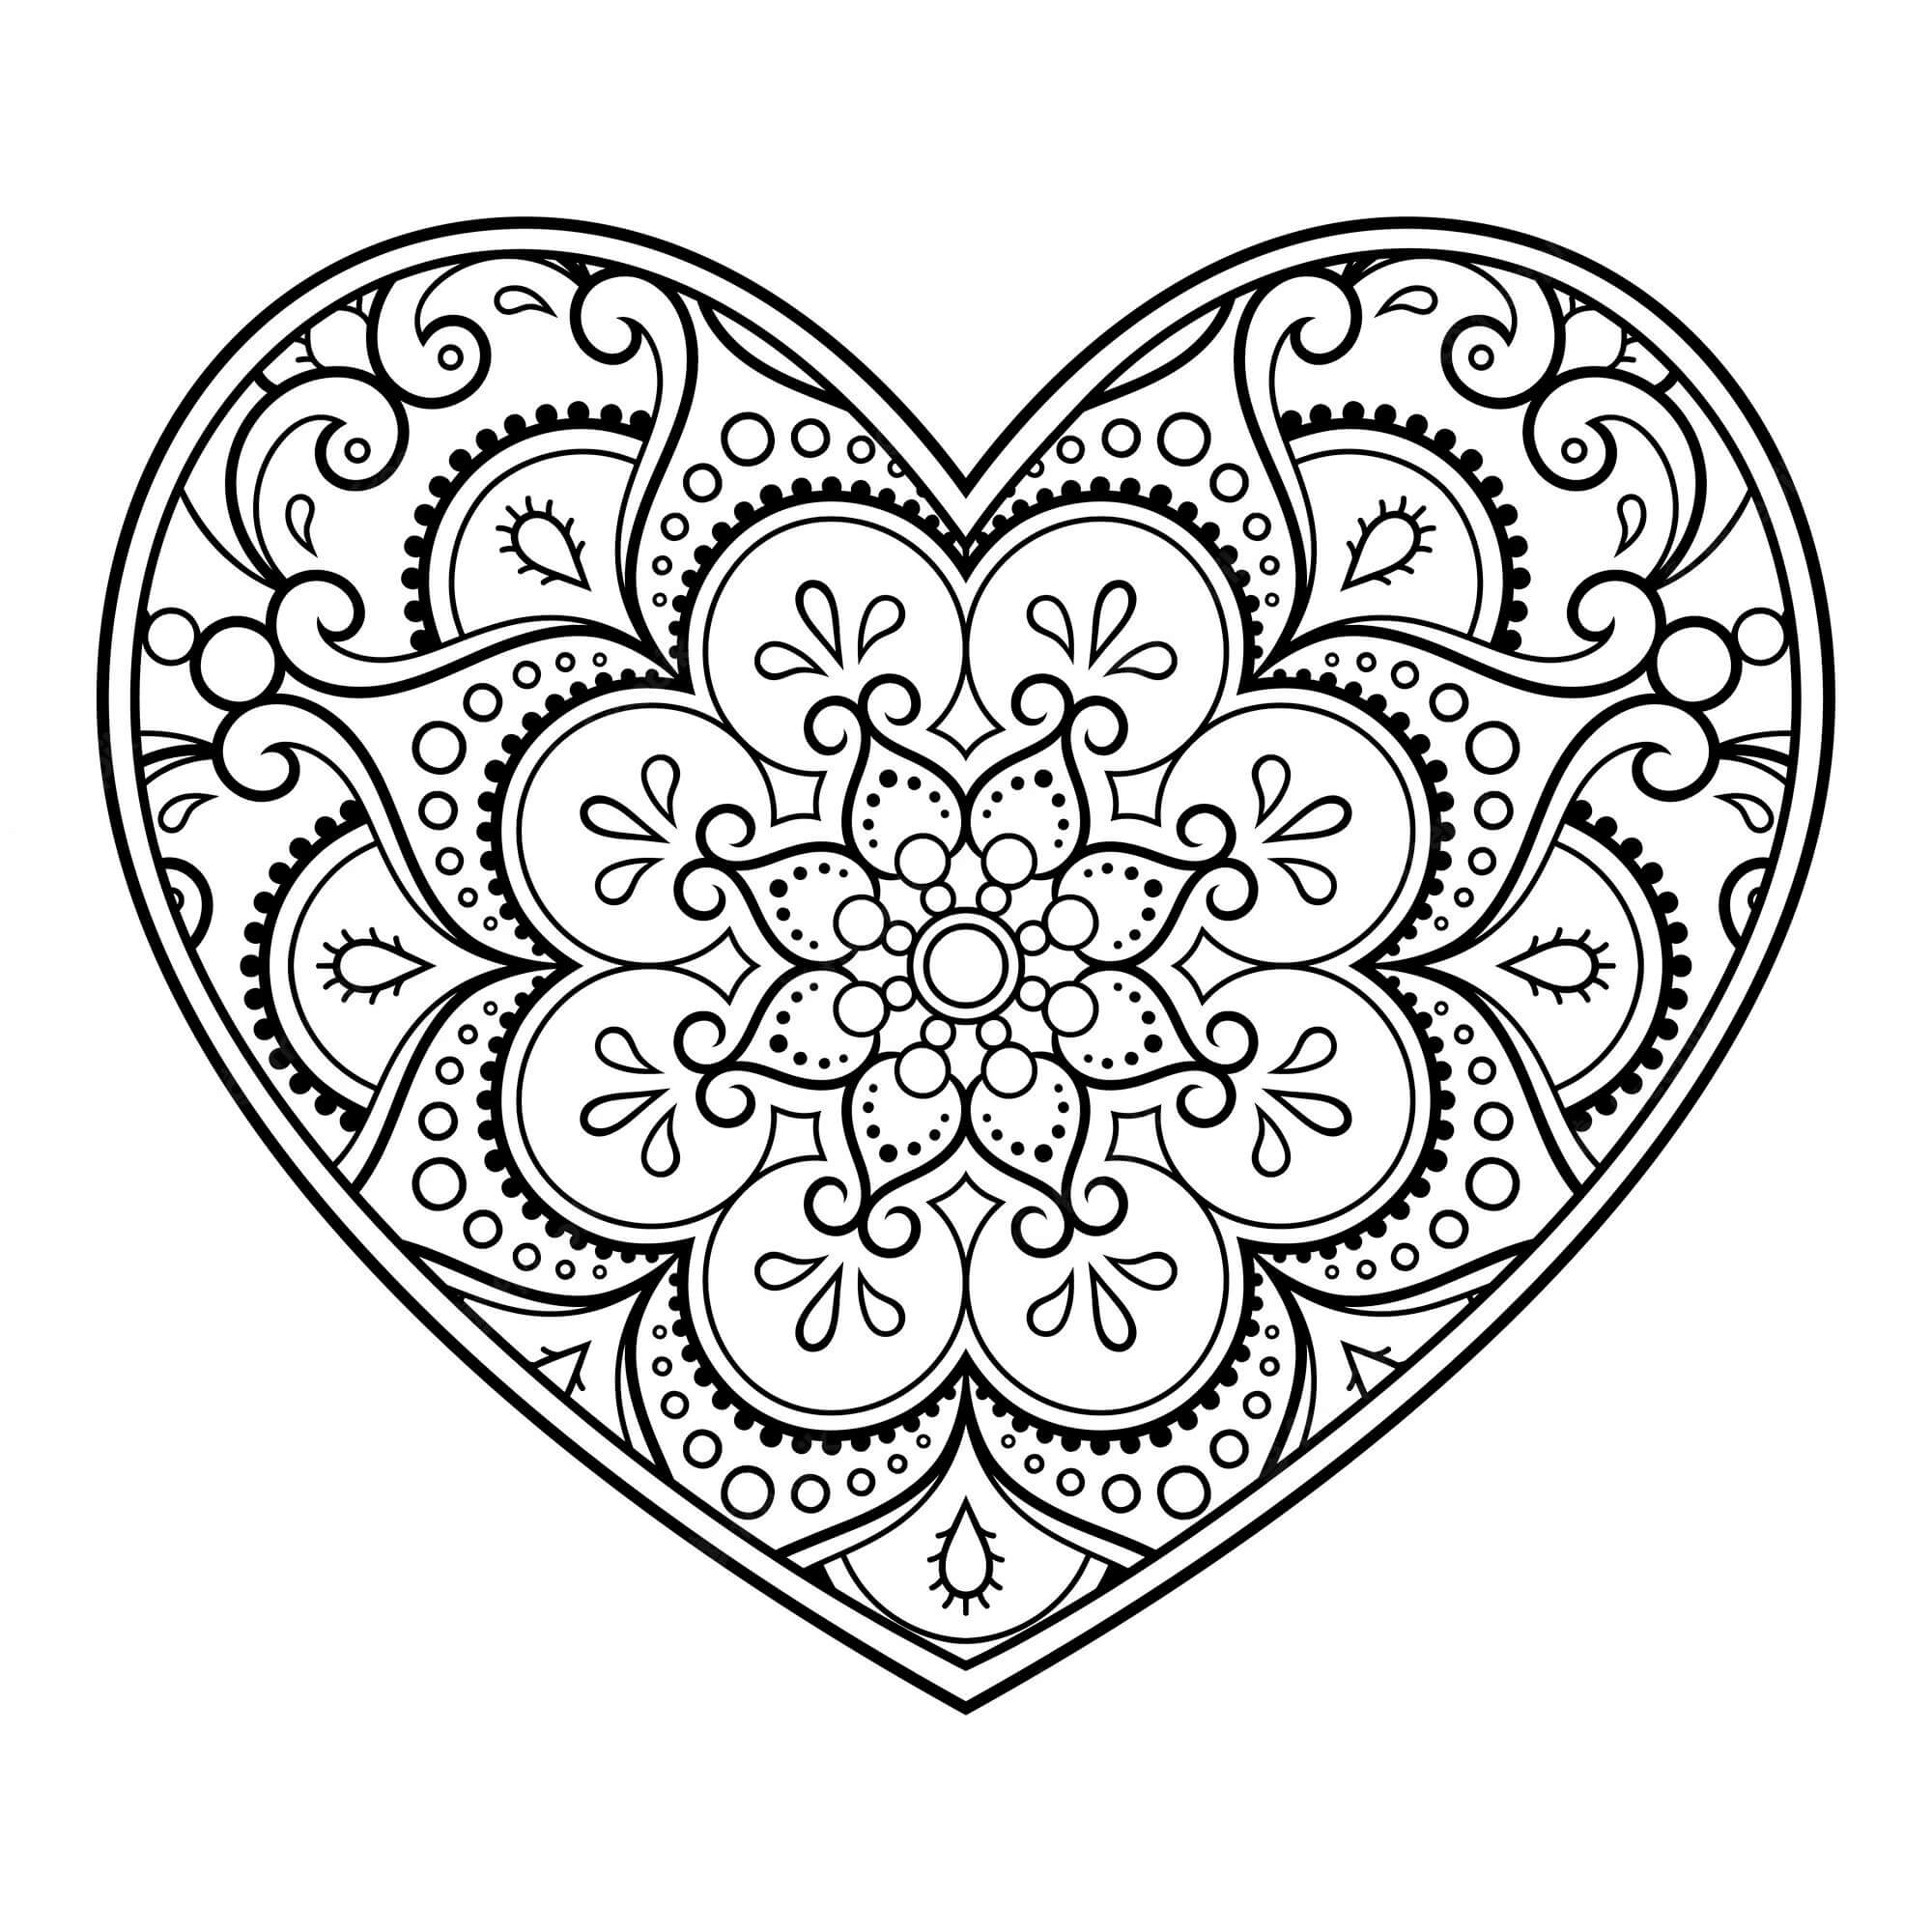 Mandala Heart Coloring Page – Sheet 3 Mandala